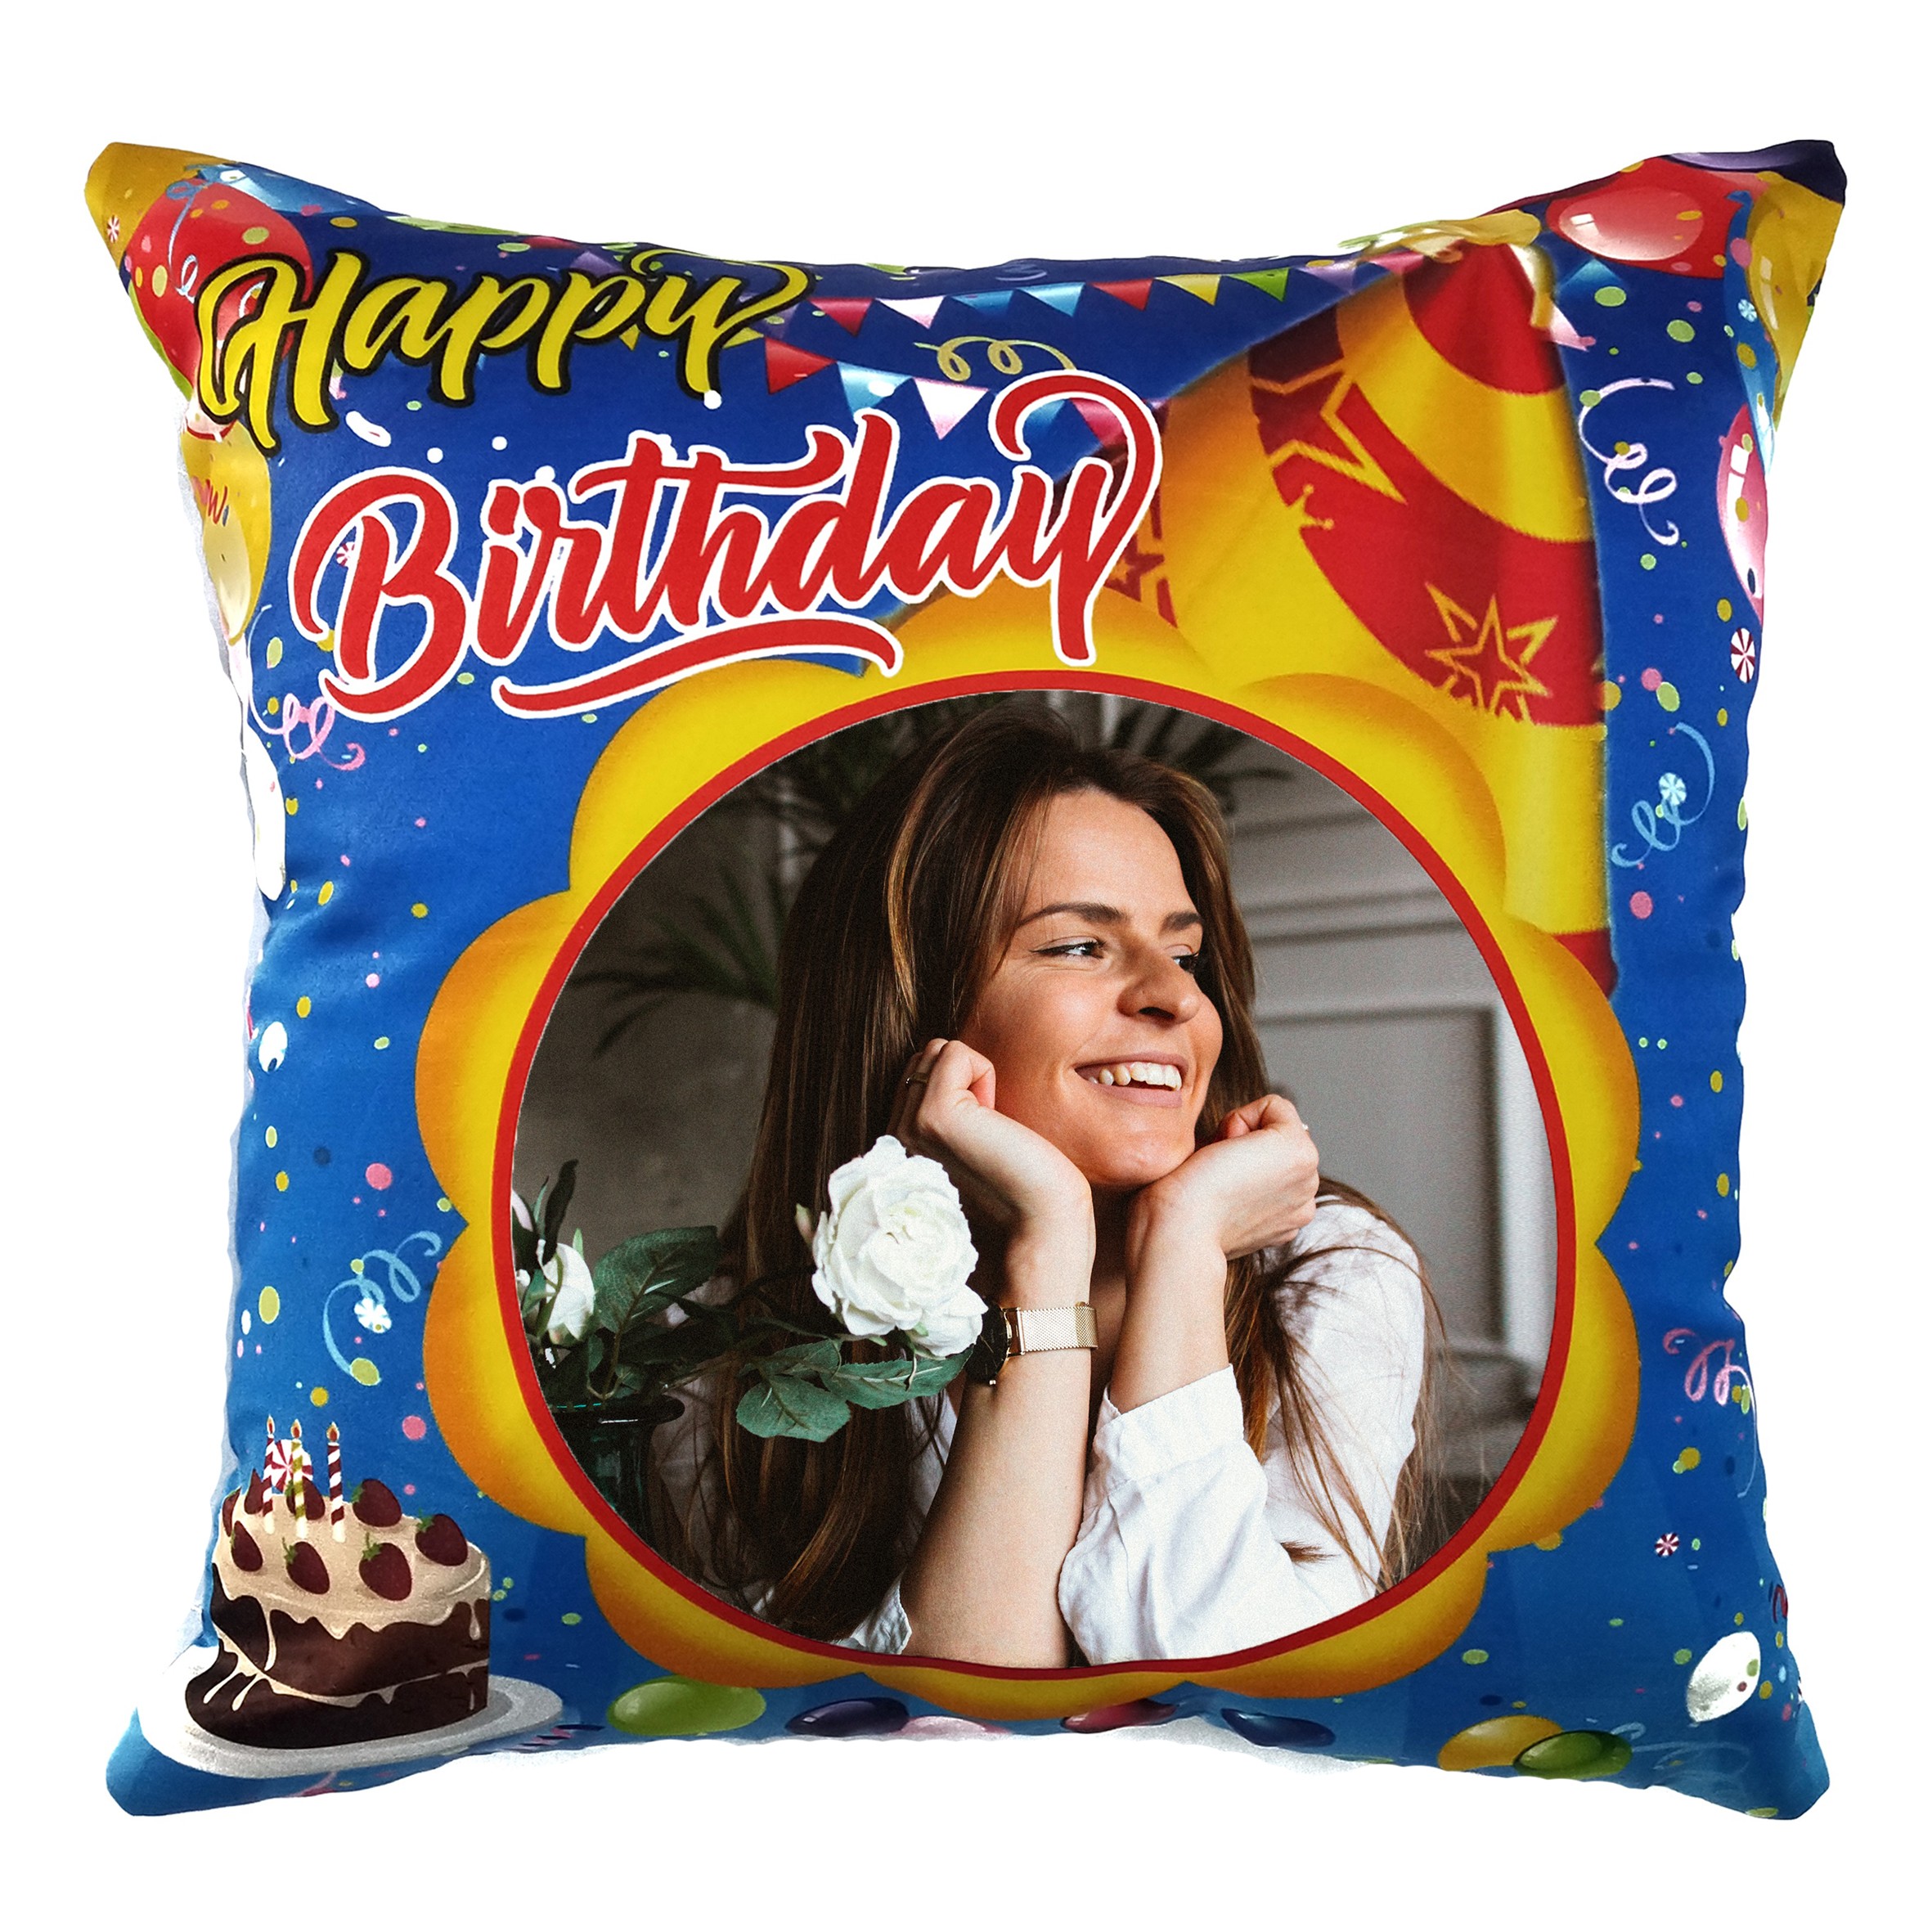 Square Shape Personalized Photo Printed Cushion (Happy Birthday Design Pre Printed)